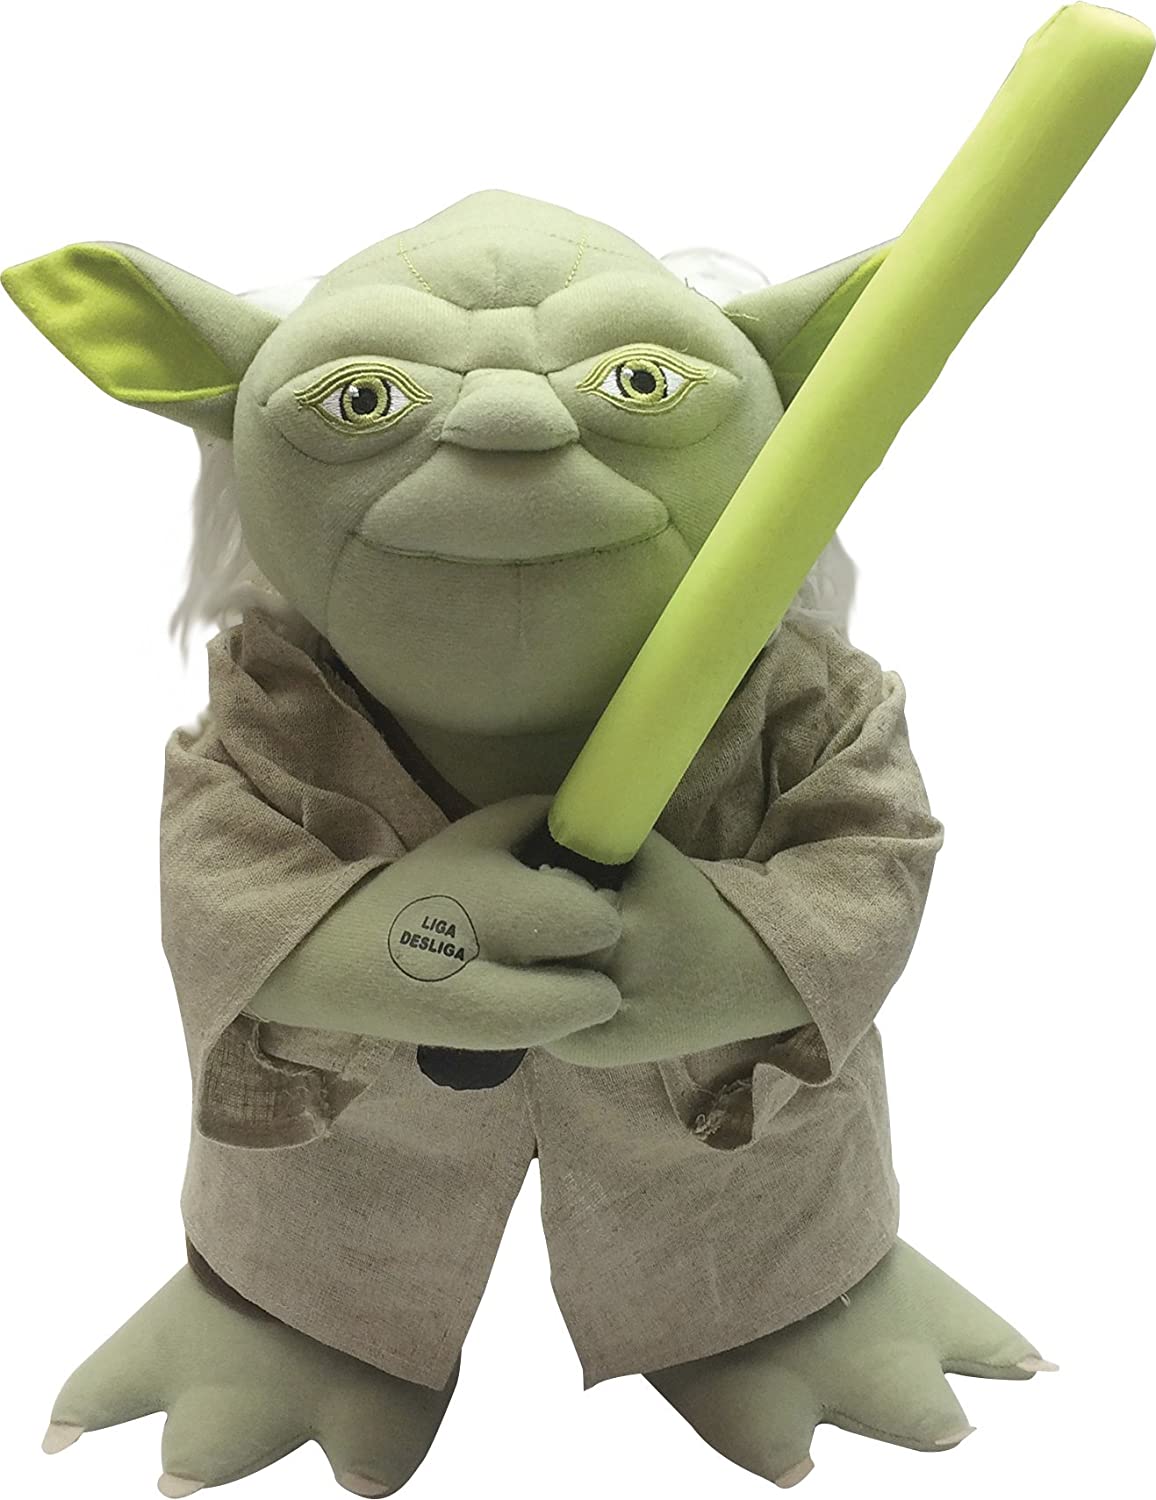 Pelucia Star Wars Mestre Yoda C/ Reconhecimento De Voz 43cm